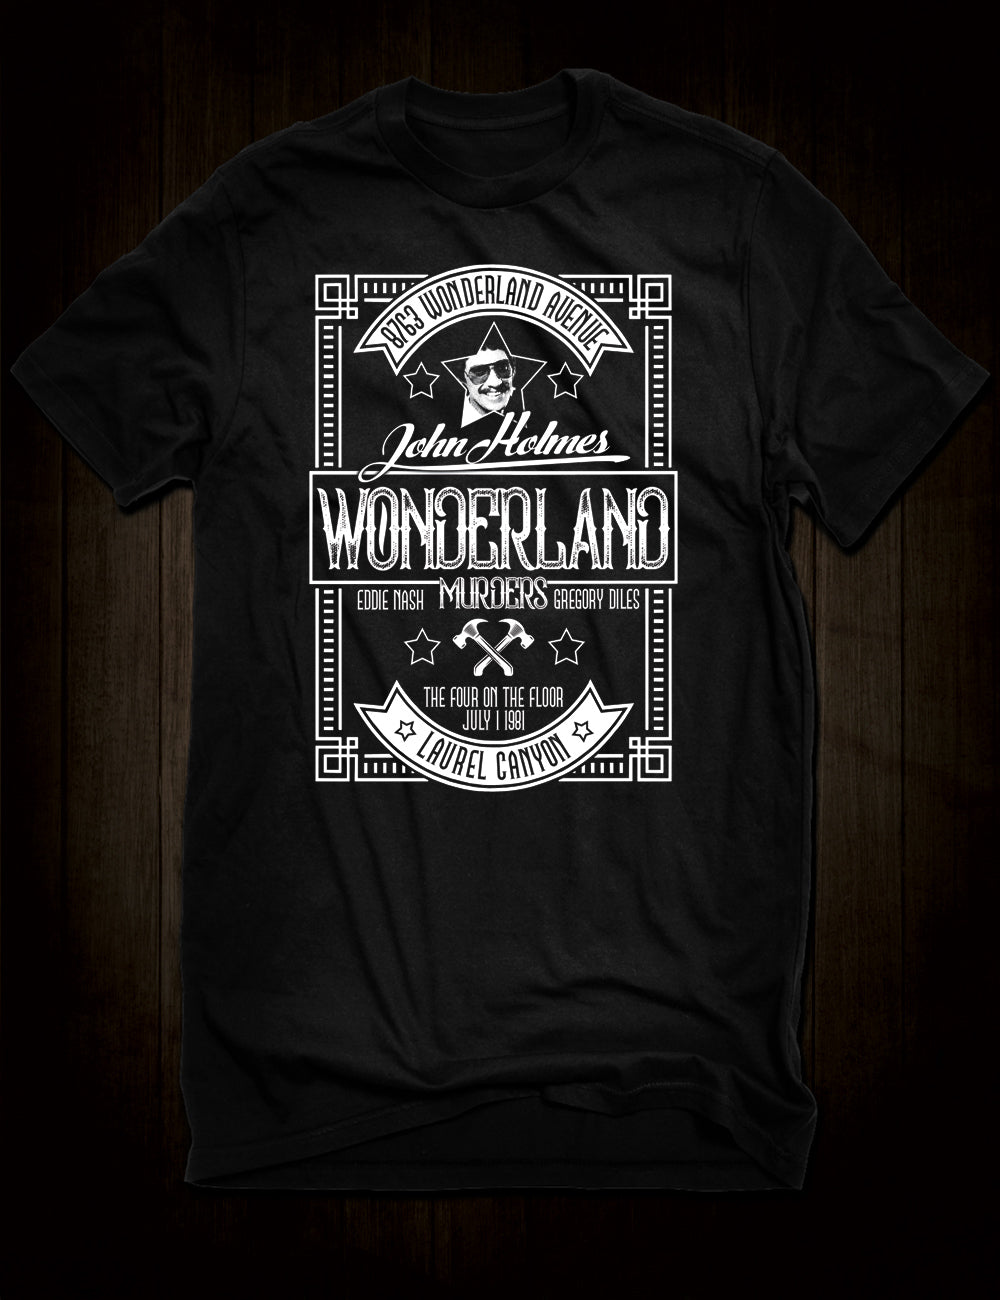 The Wonderland Murders T-Shirt